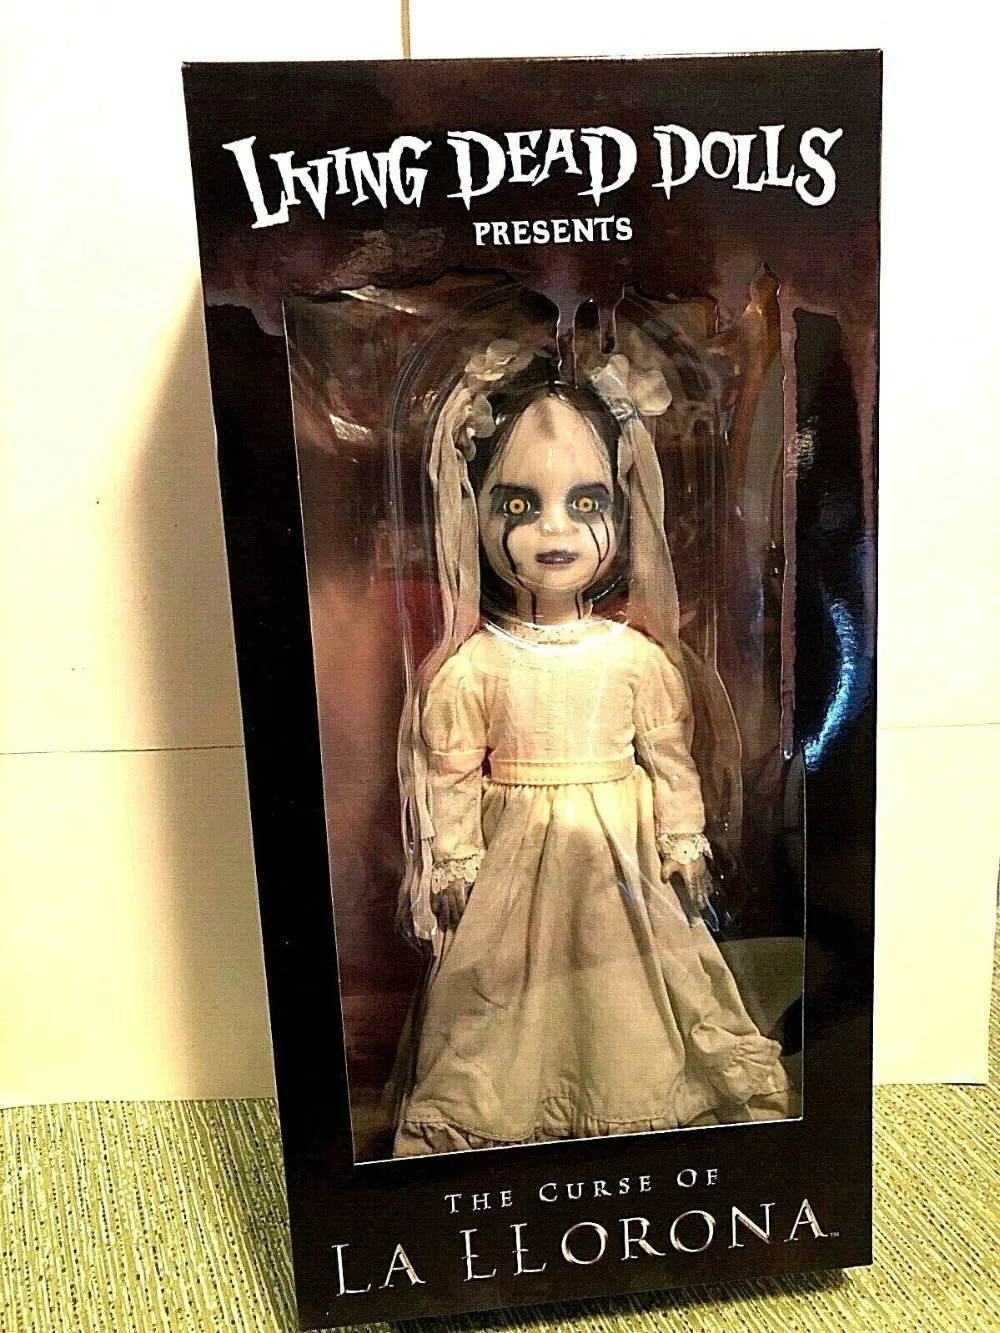 Horror Movie The Curse Of La Llorona Living Dead Dolls Presents Mezco Toyz Original Collection